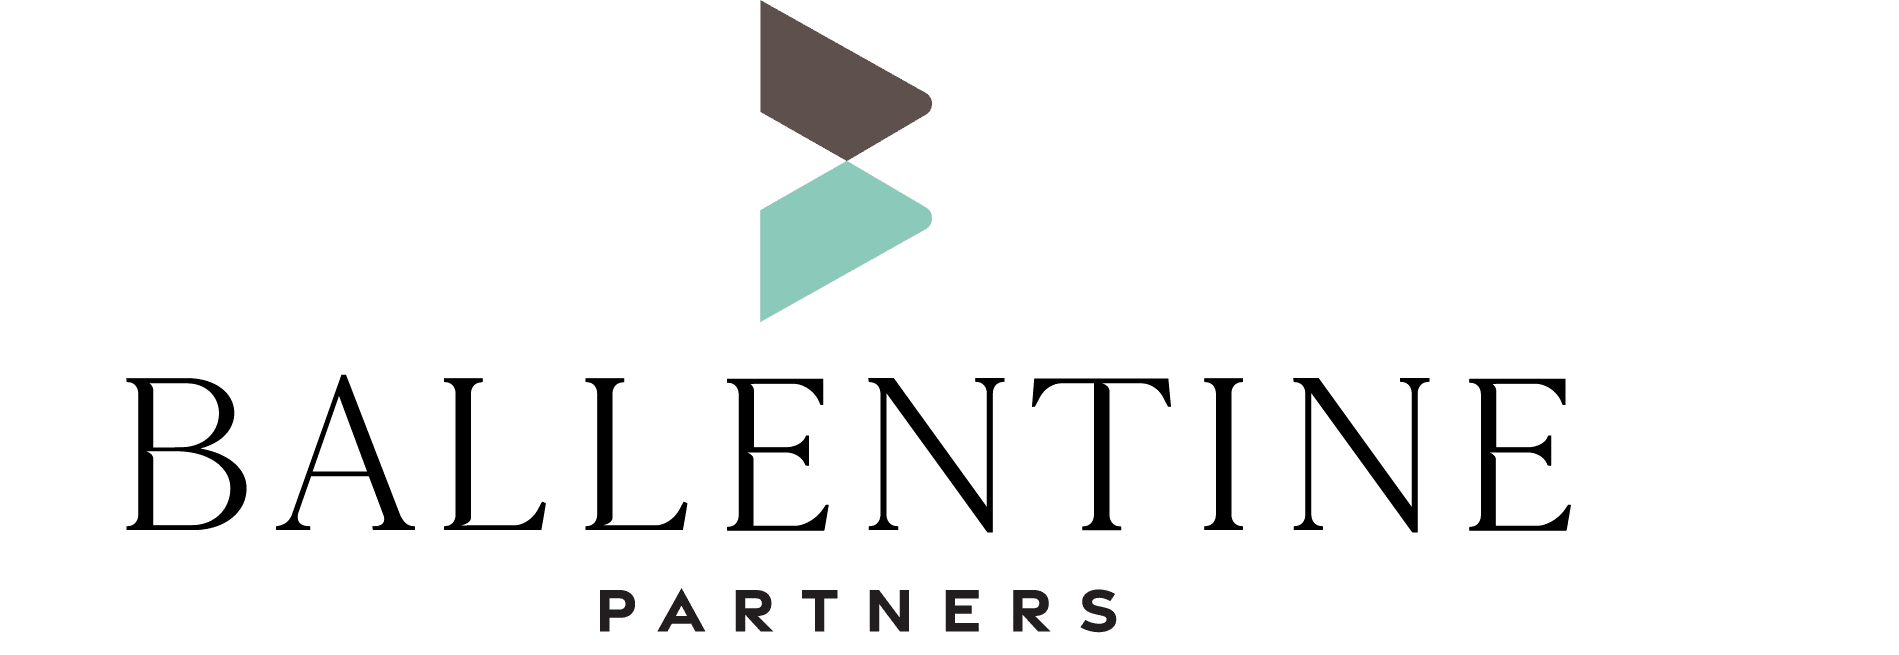 Ballentine Partners, LLC logo